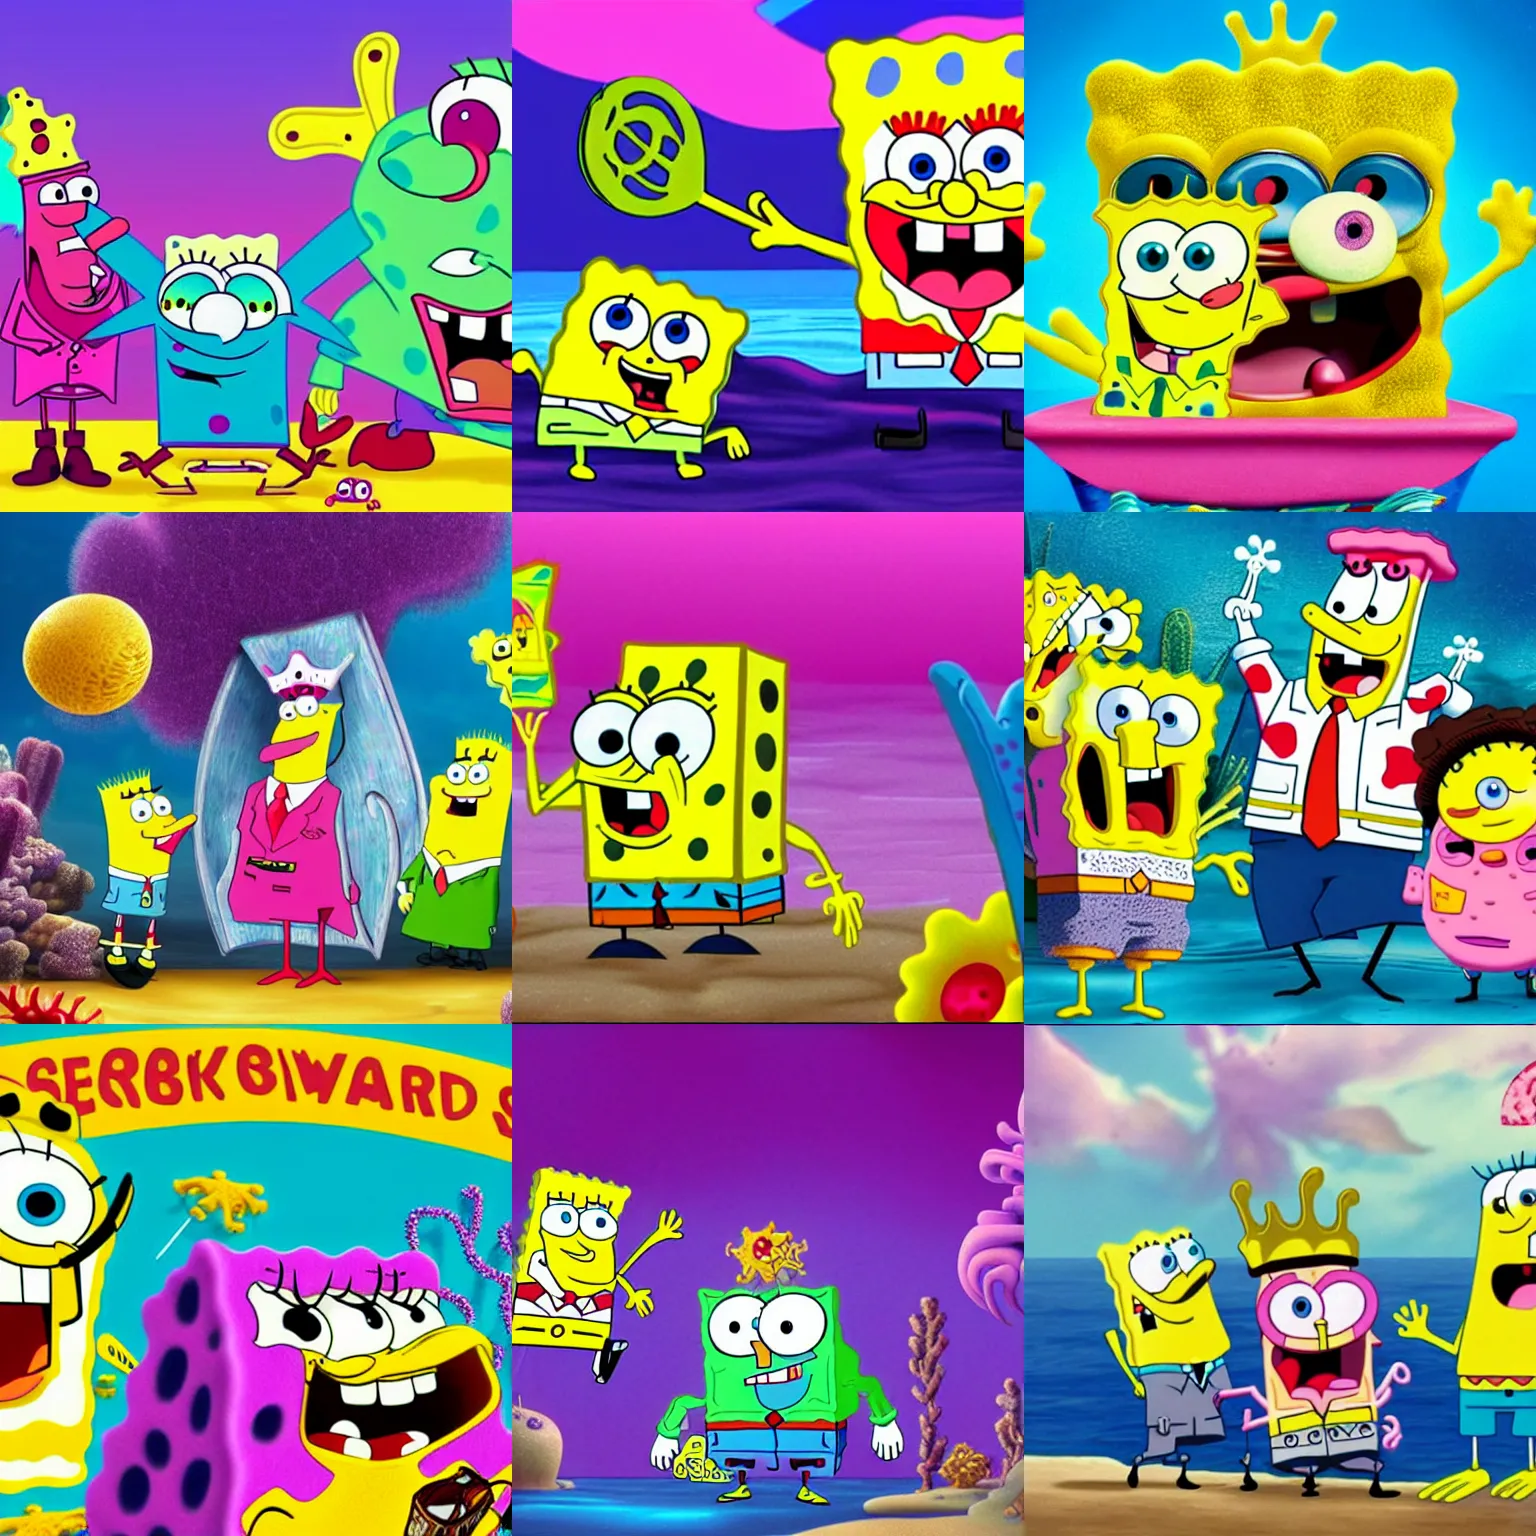 Prompt: the movie spongebob squarepants